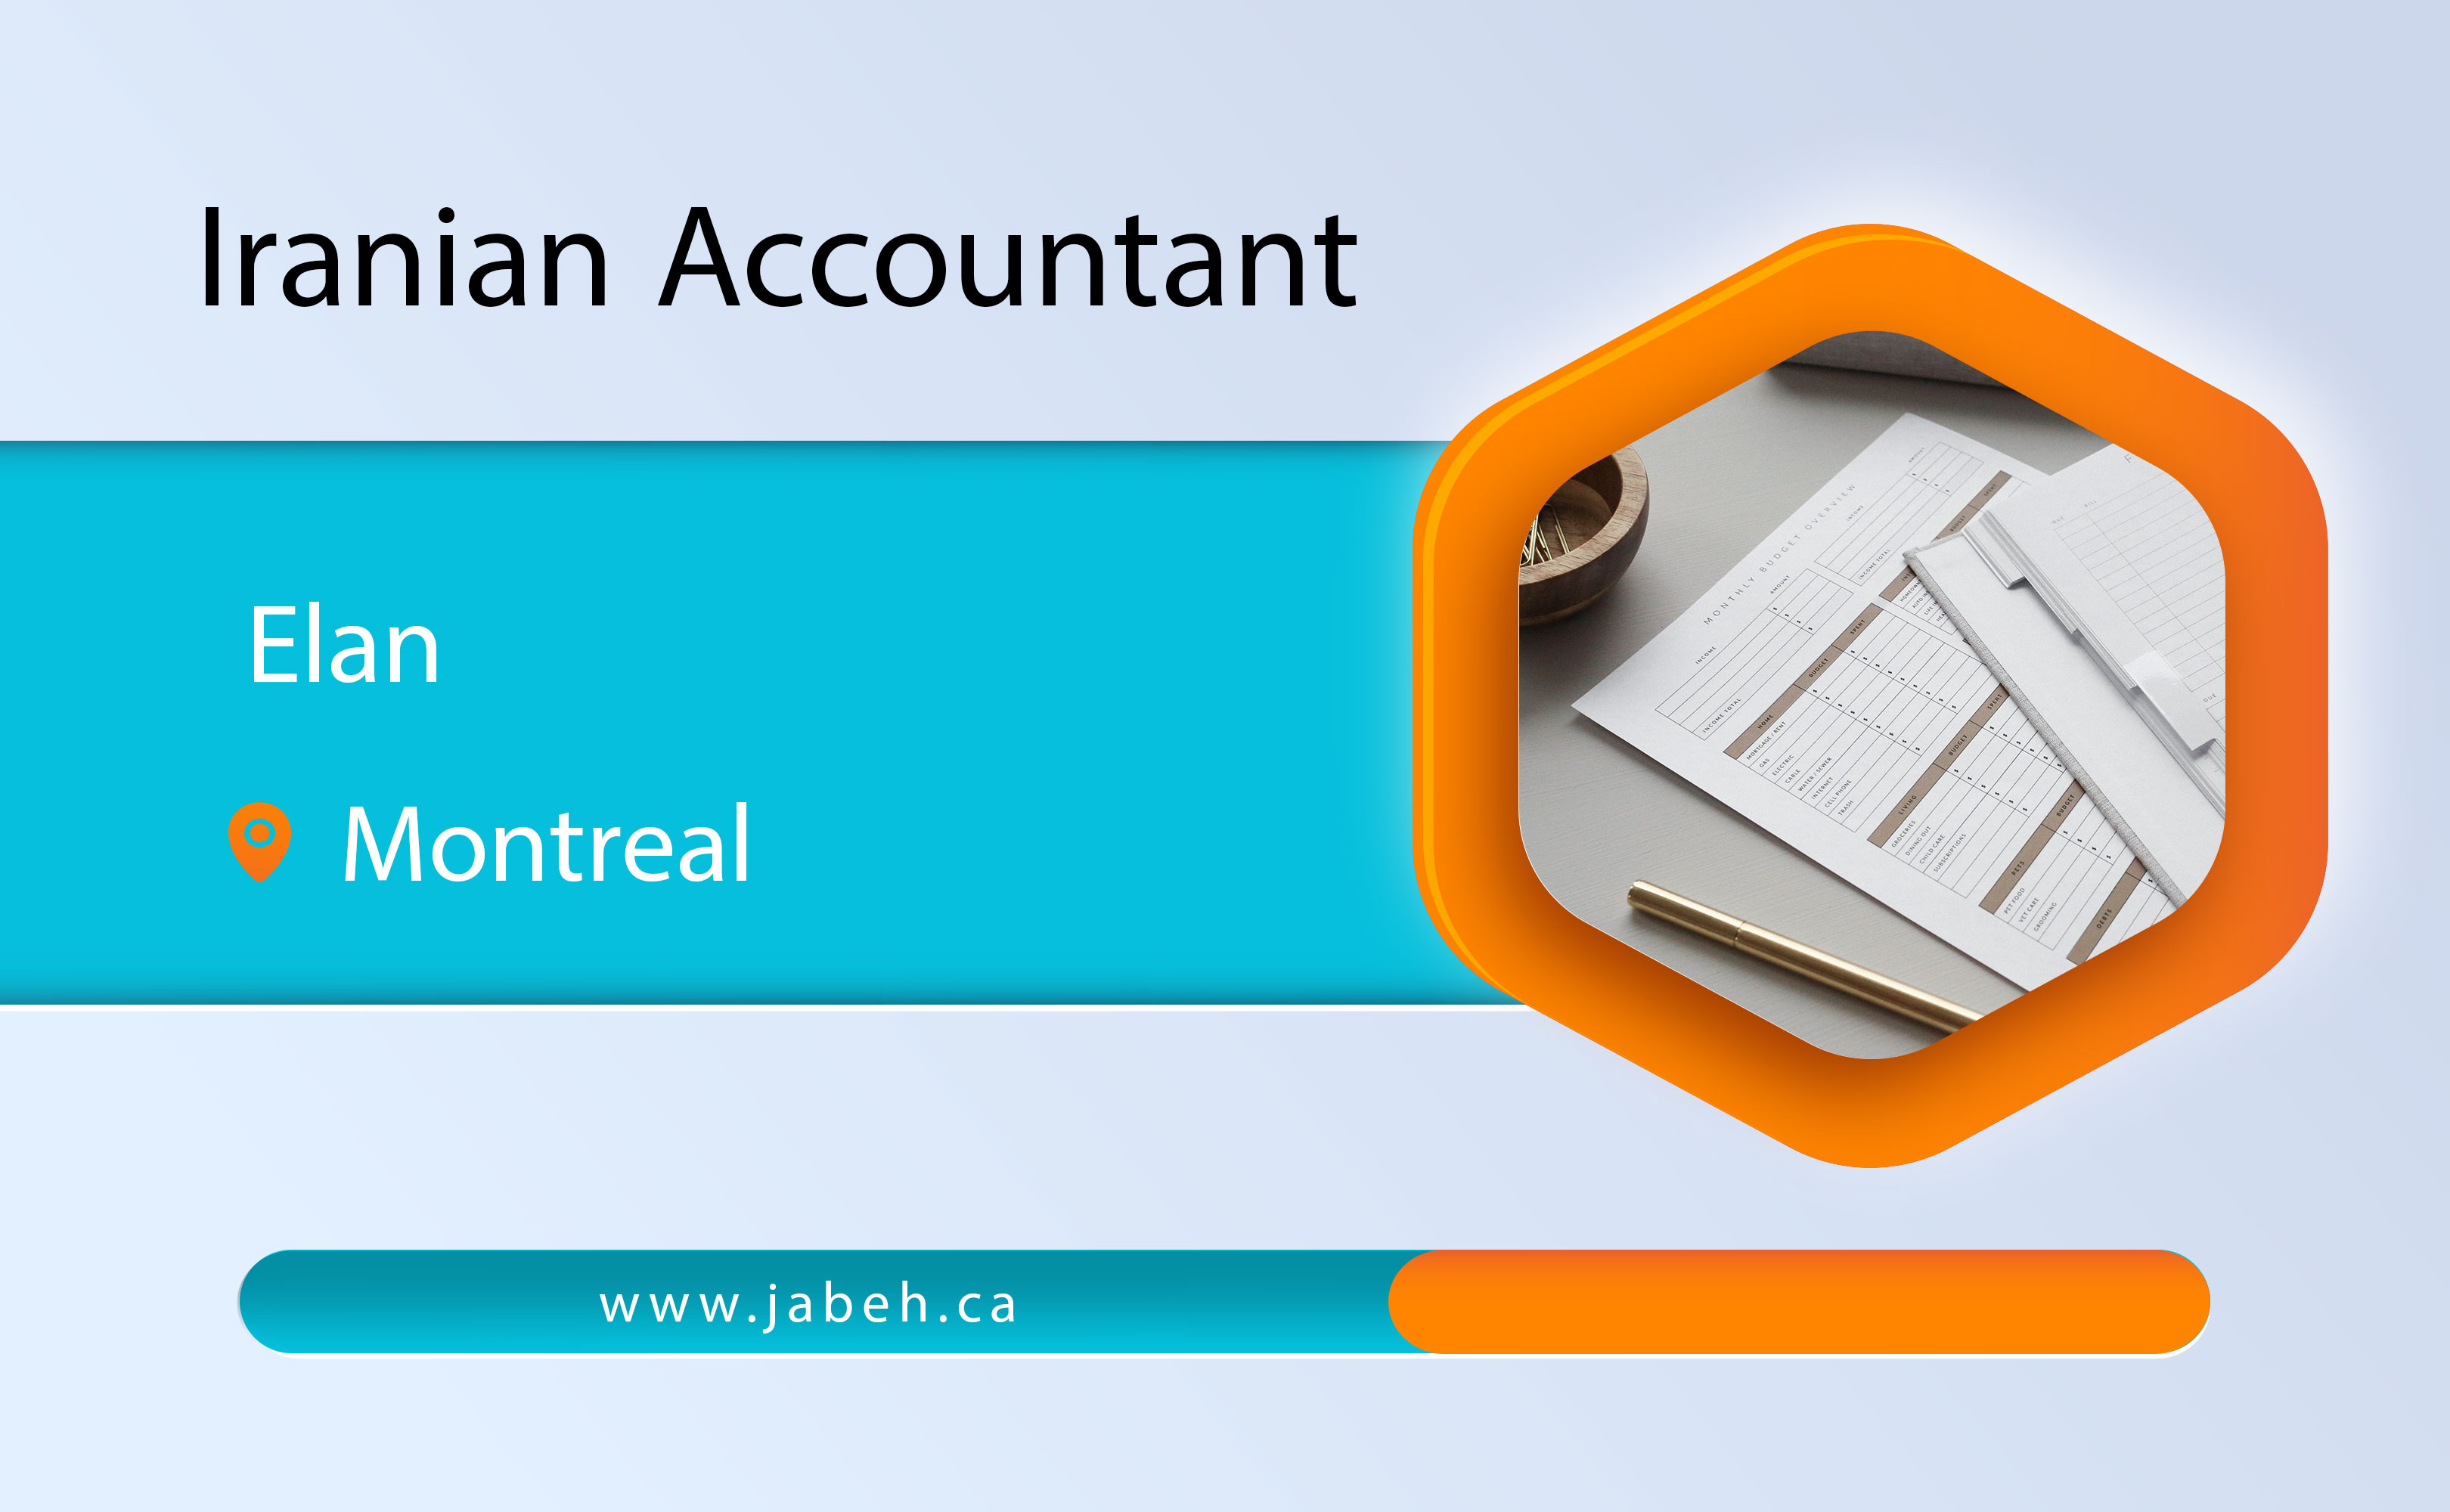 Elan Iranian accounting in Montreal